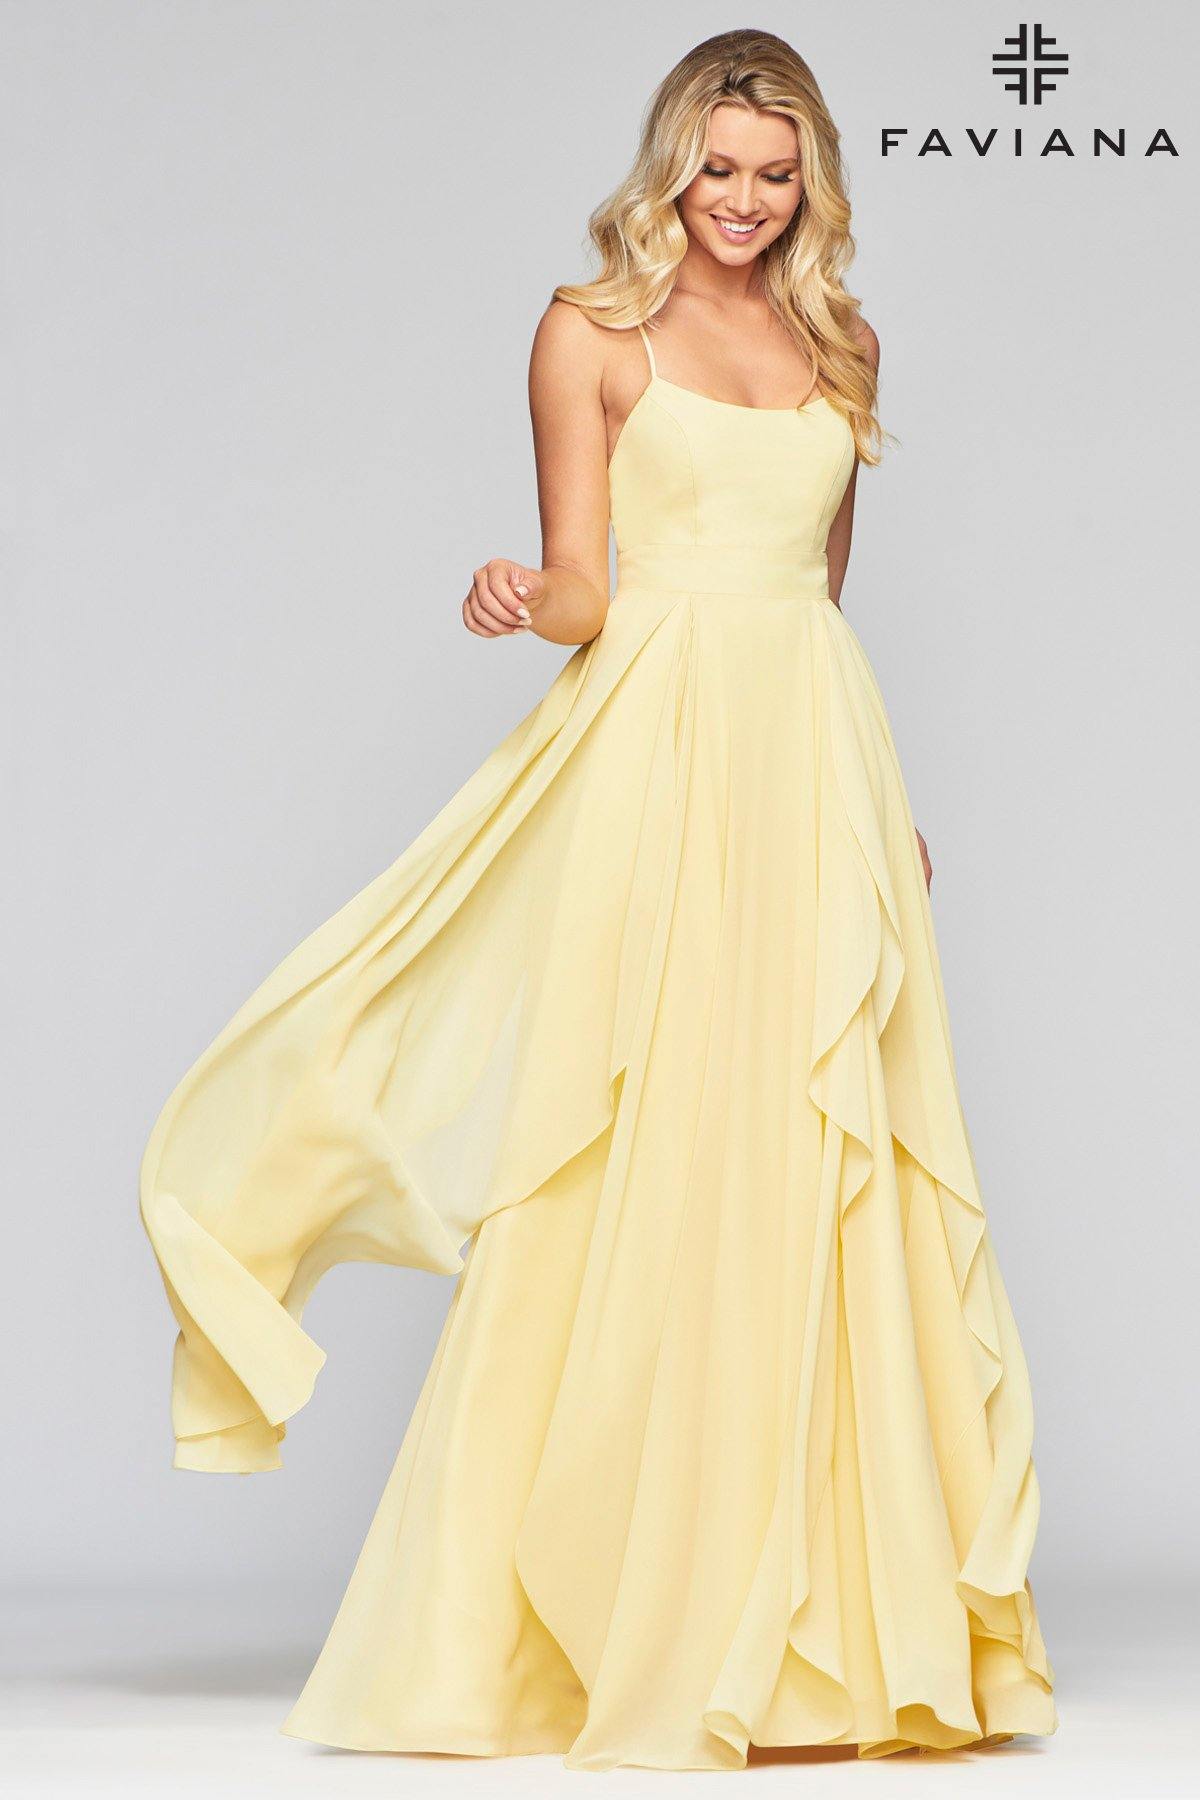 Faviana S10434 Long Bridesmaids Chiffon Prom Dress - The Dress Outlet Faviana